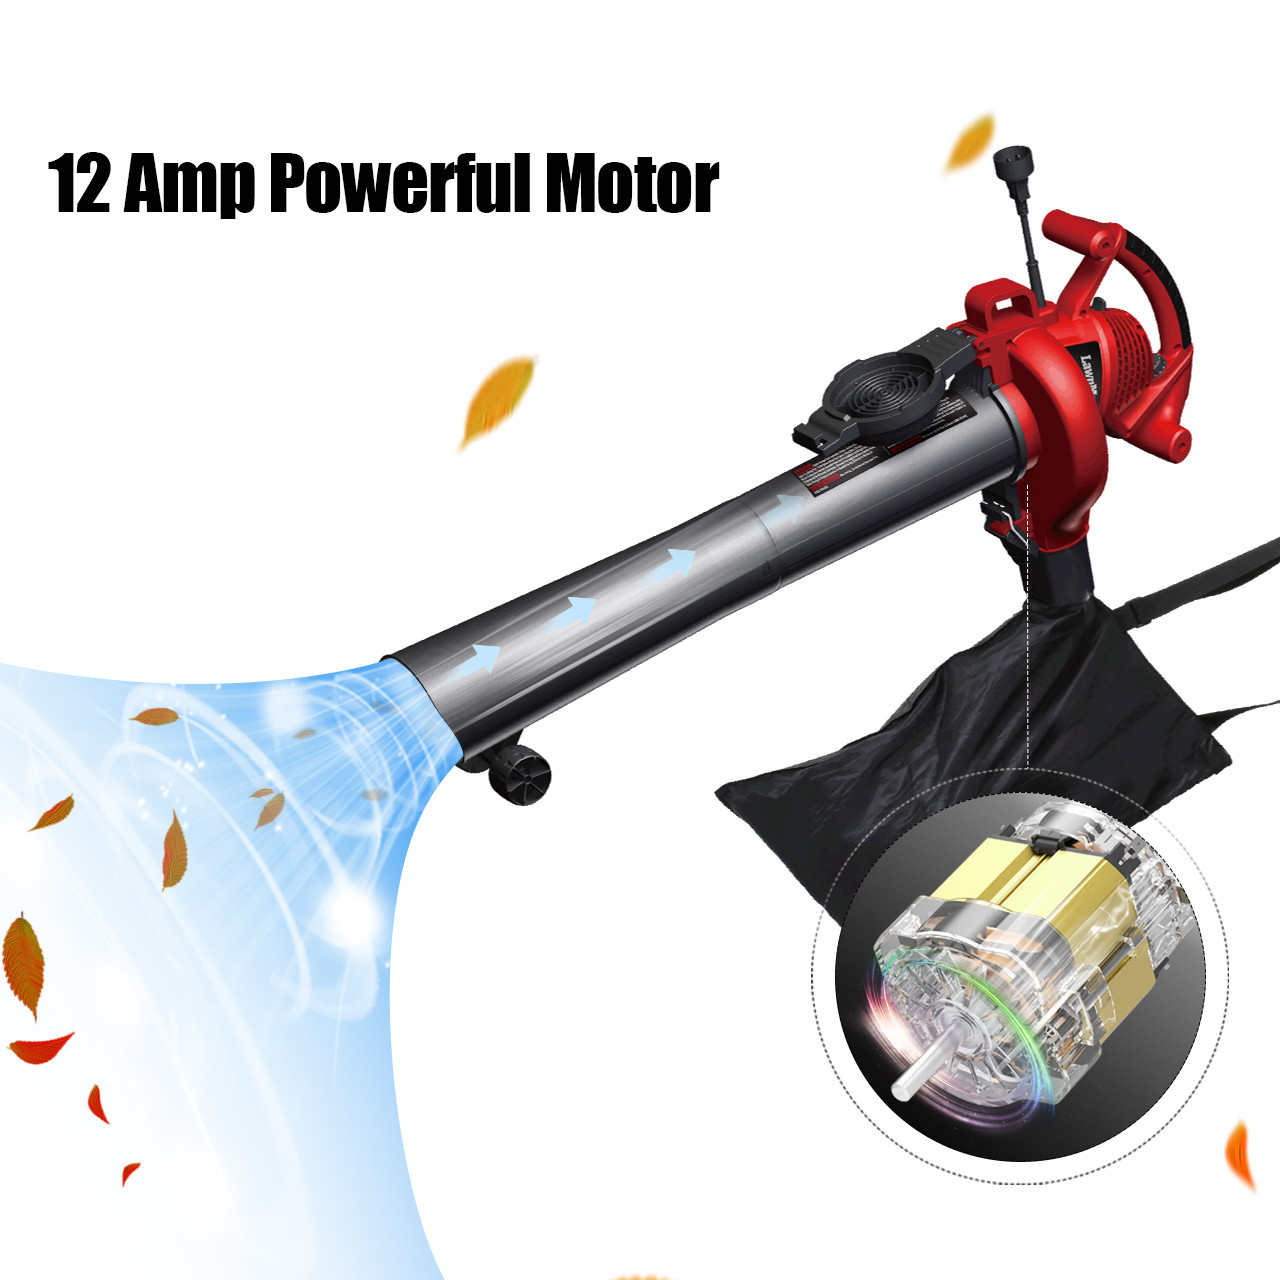 12 Amp High Performance Blower/Vacuum/Mulcher